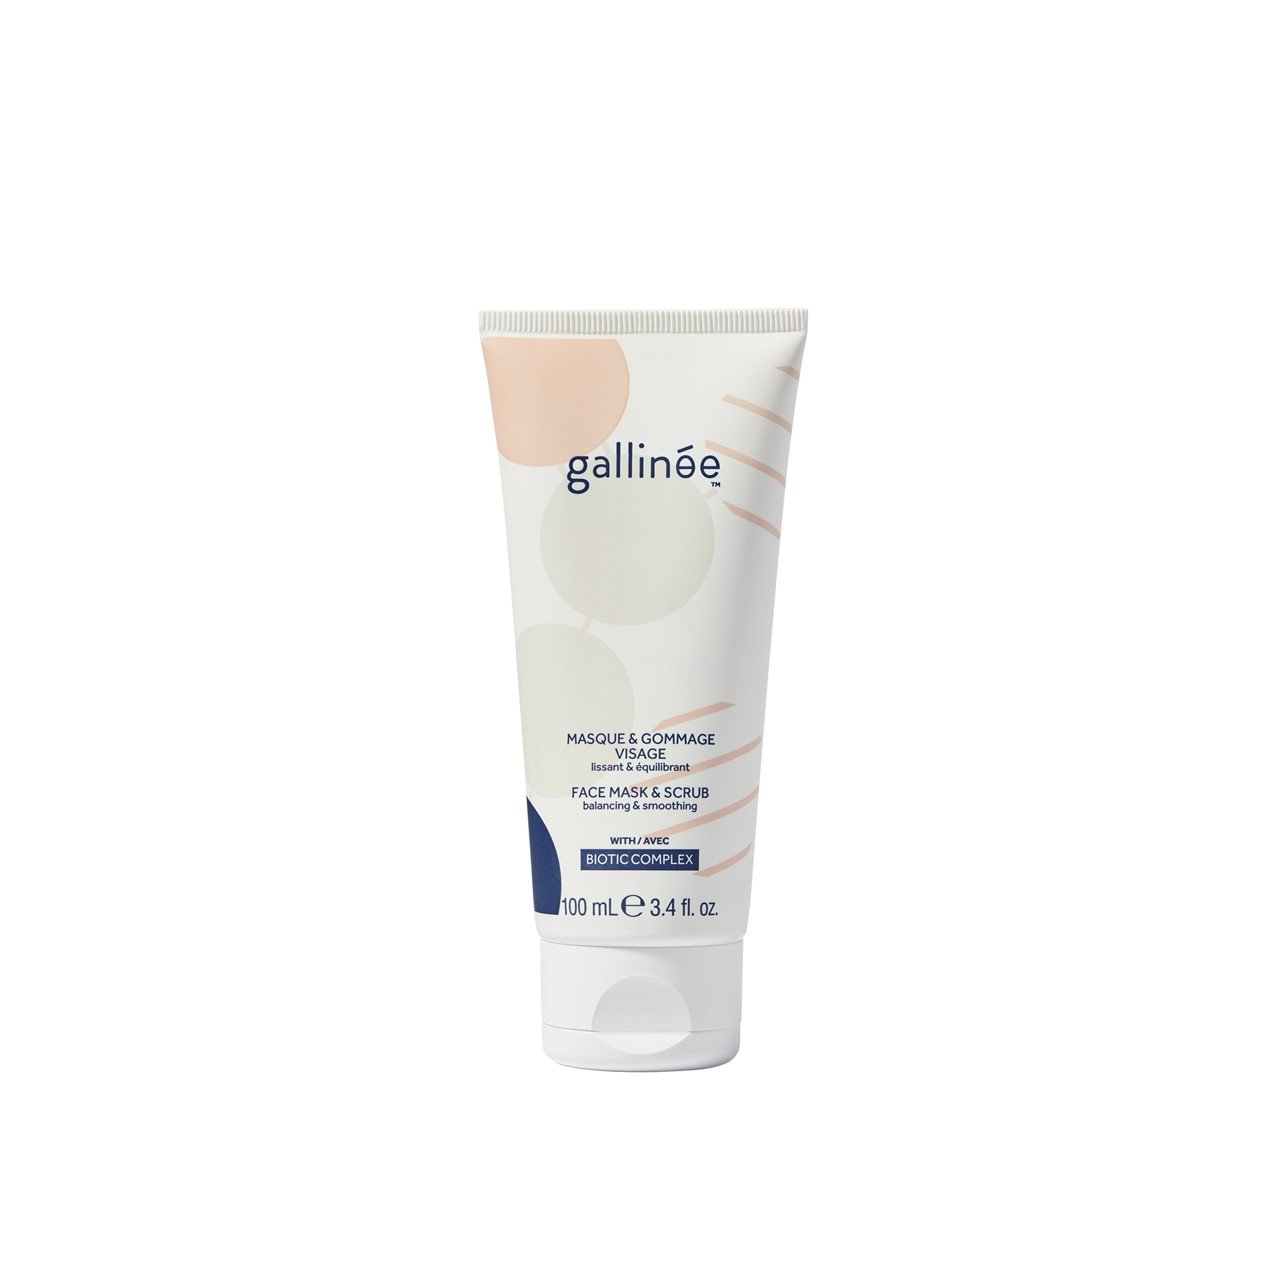 Gallinée Prebiotic Face Mask & Scrub 100ml (3.38fl oz)